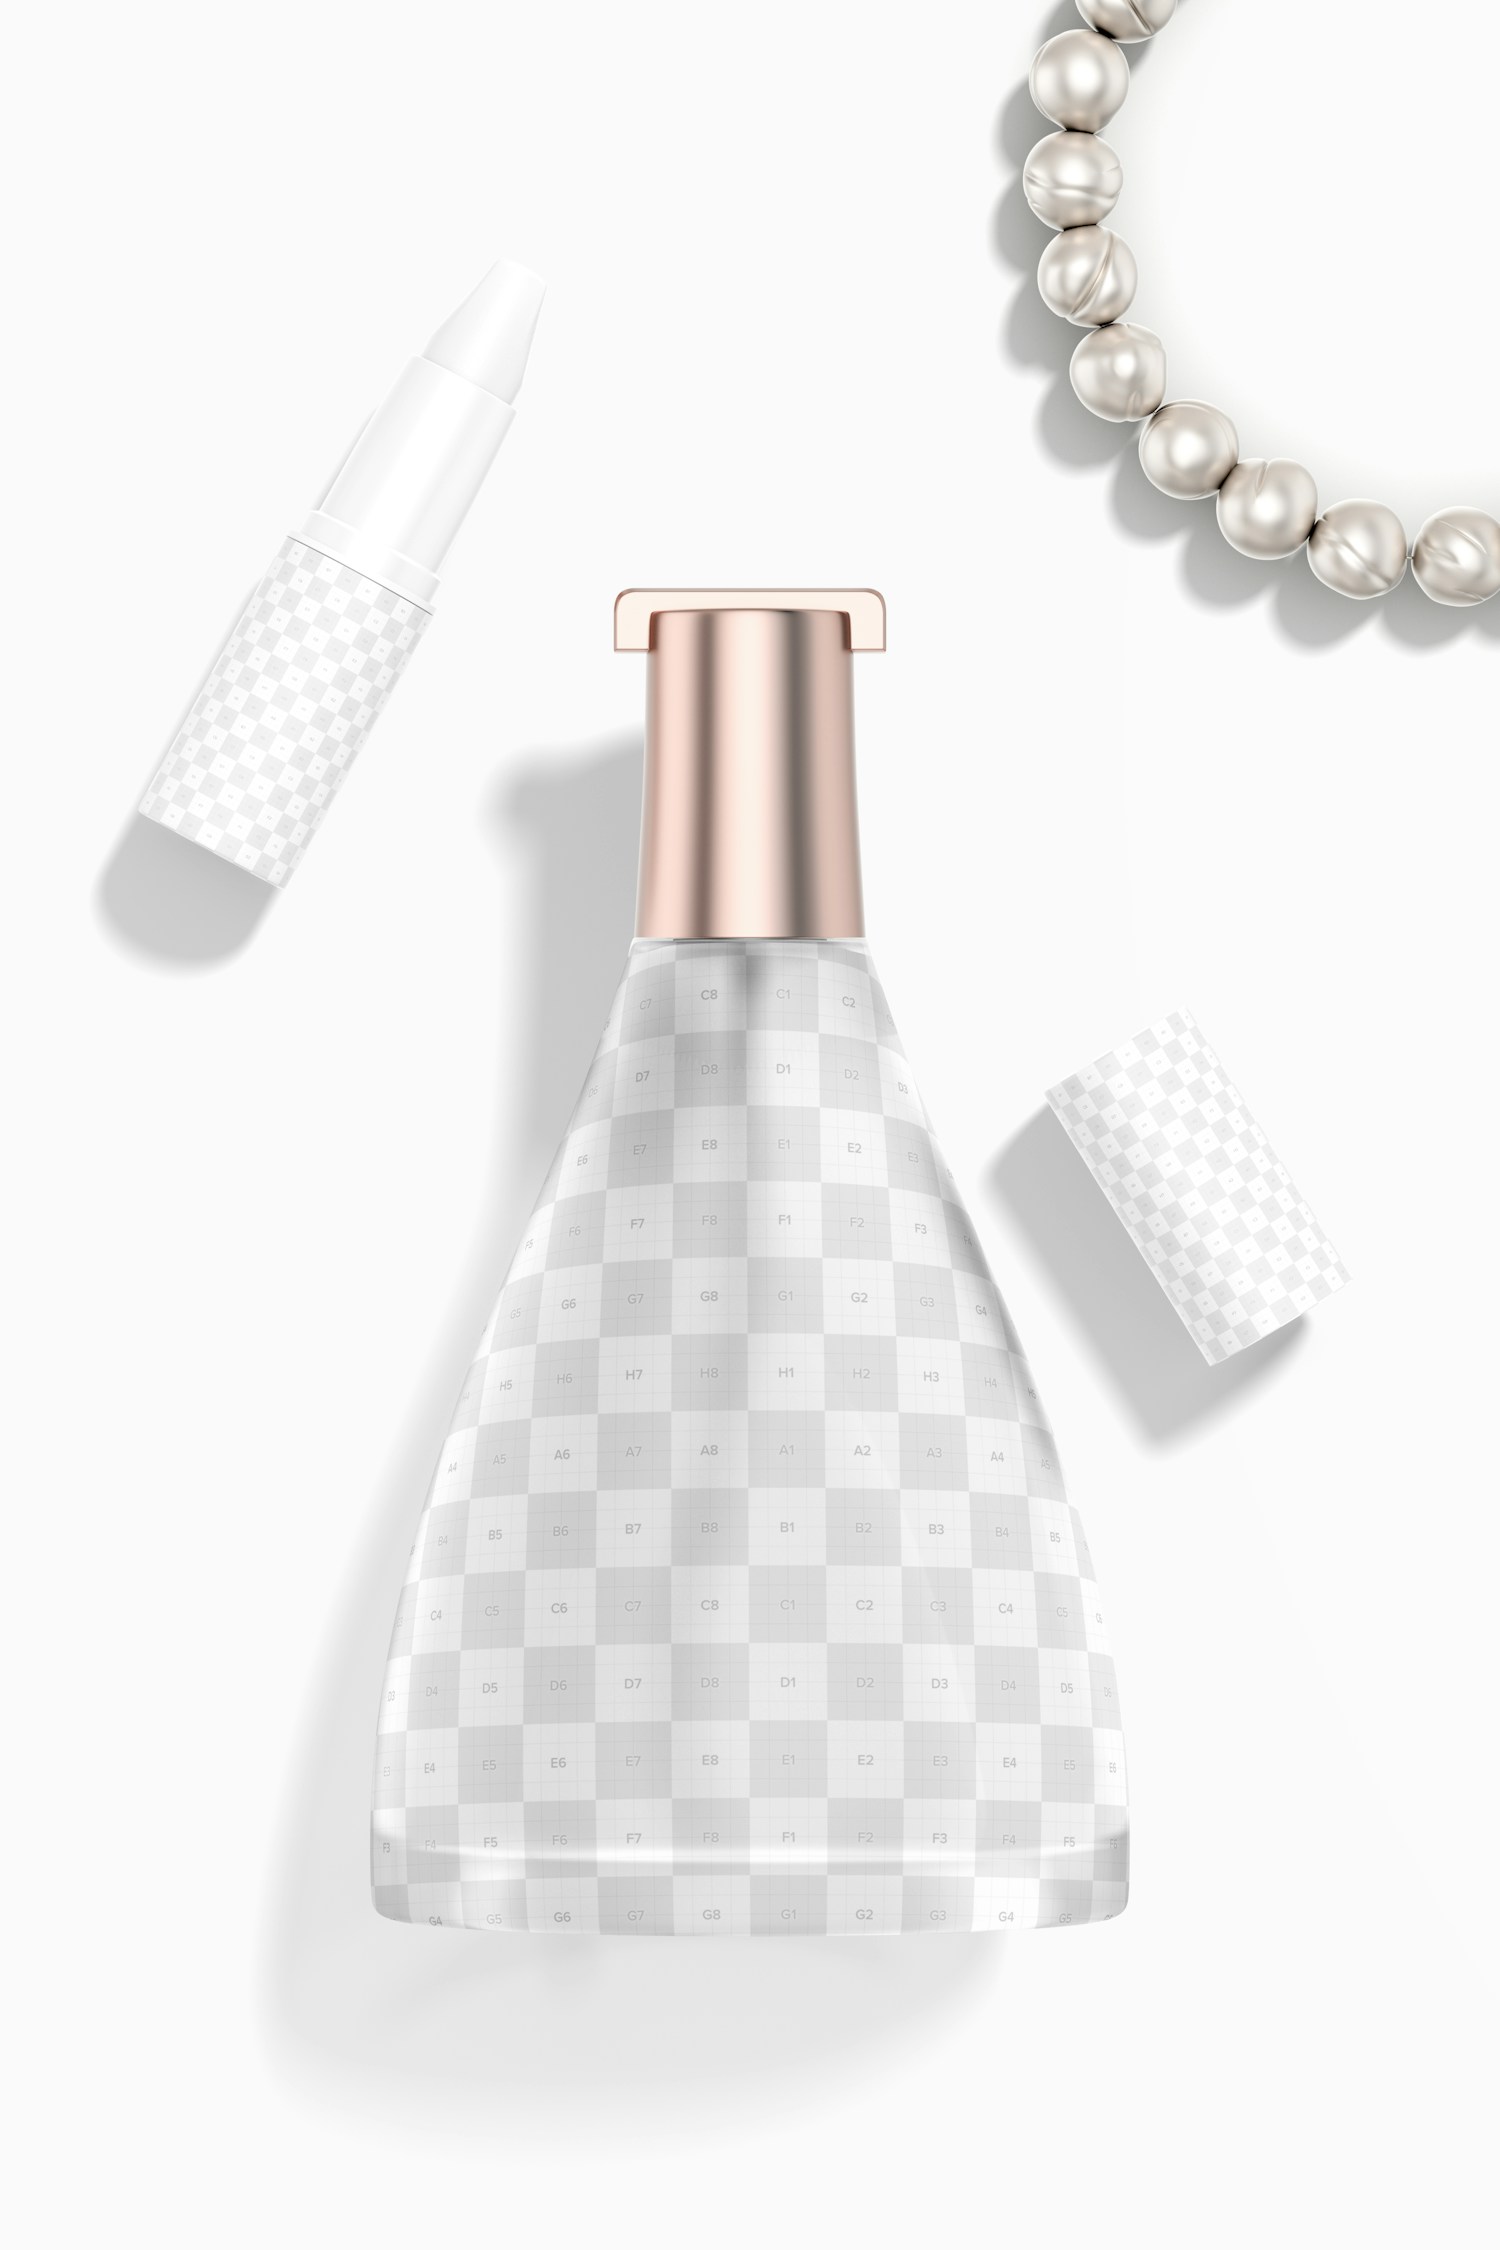 Triangular Luxury Perfume Bottle Mockup, Top View